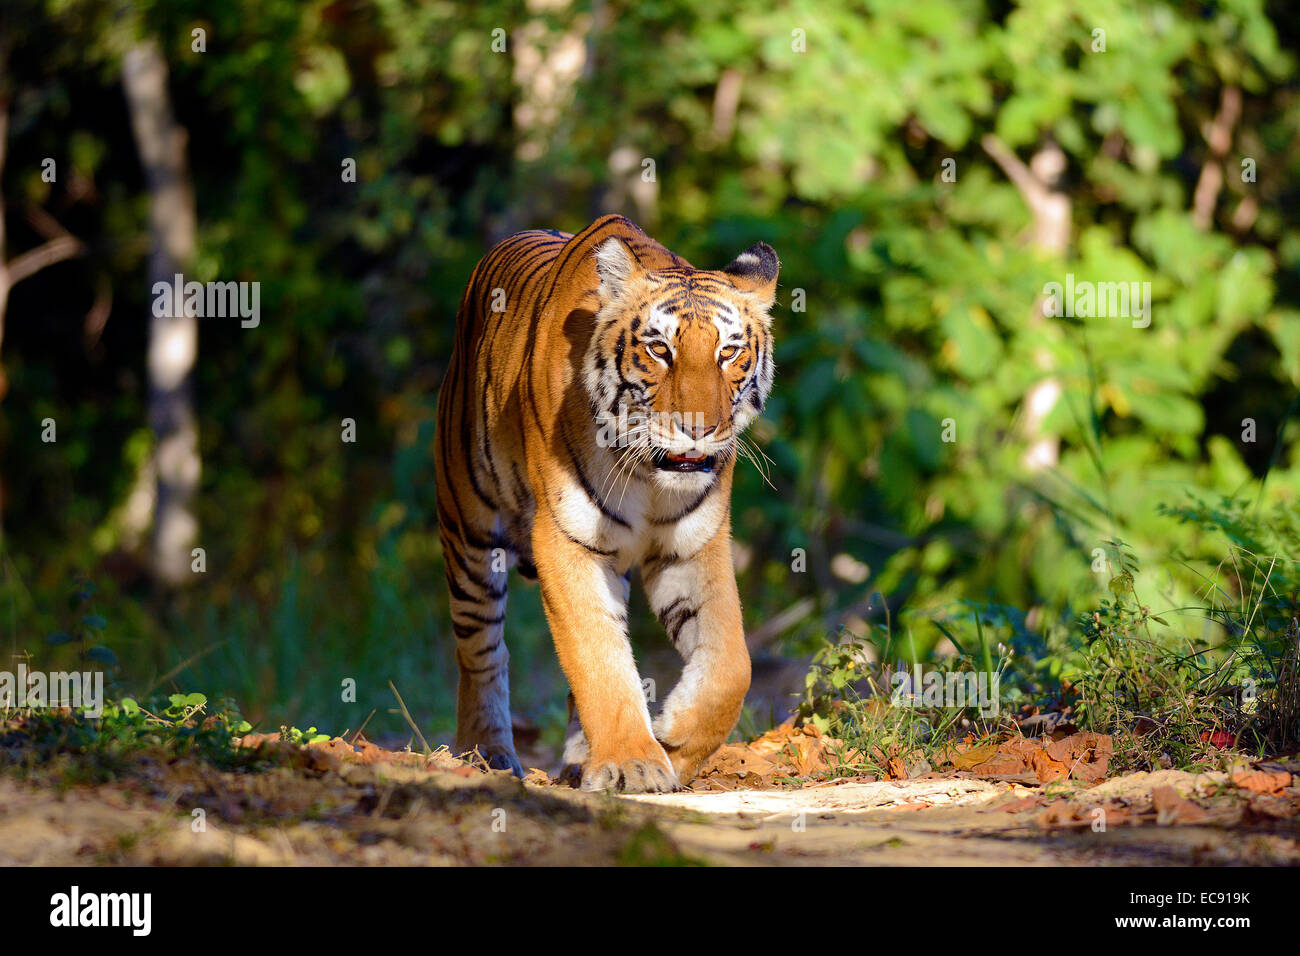 Tiger,safari road,Bijrani Range,Corbett National Park,UP,India,Wildlife,Big Cat,Predator,Mammal,Striped,Endangered Species, Stock Photo